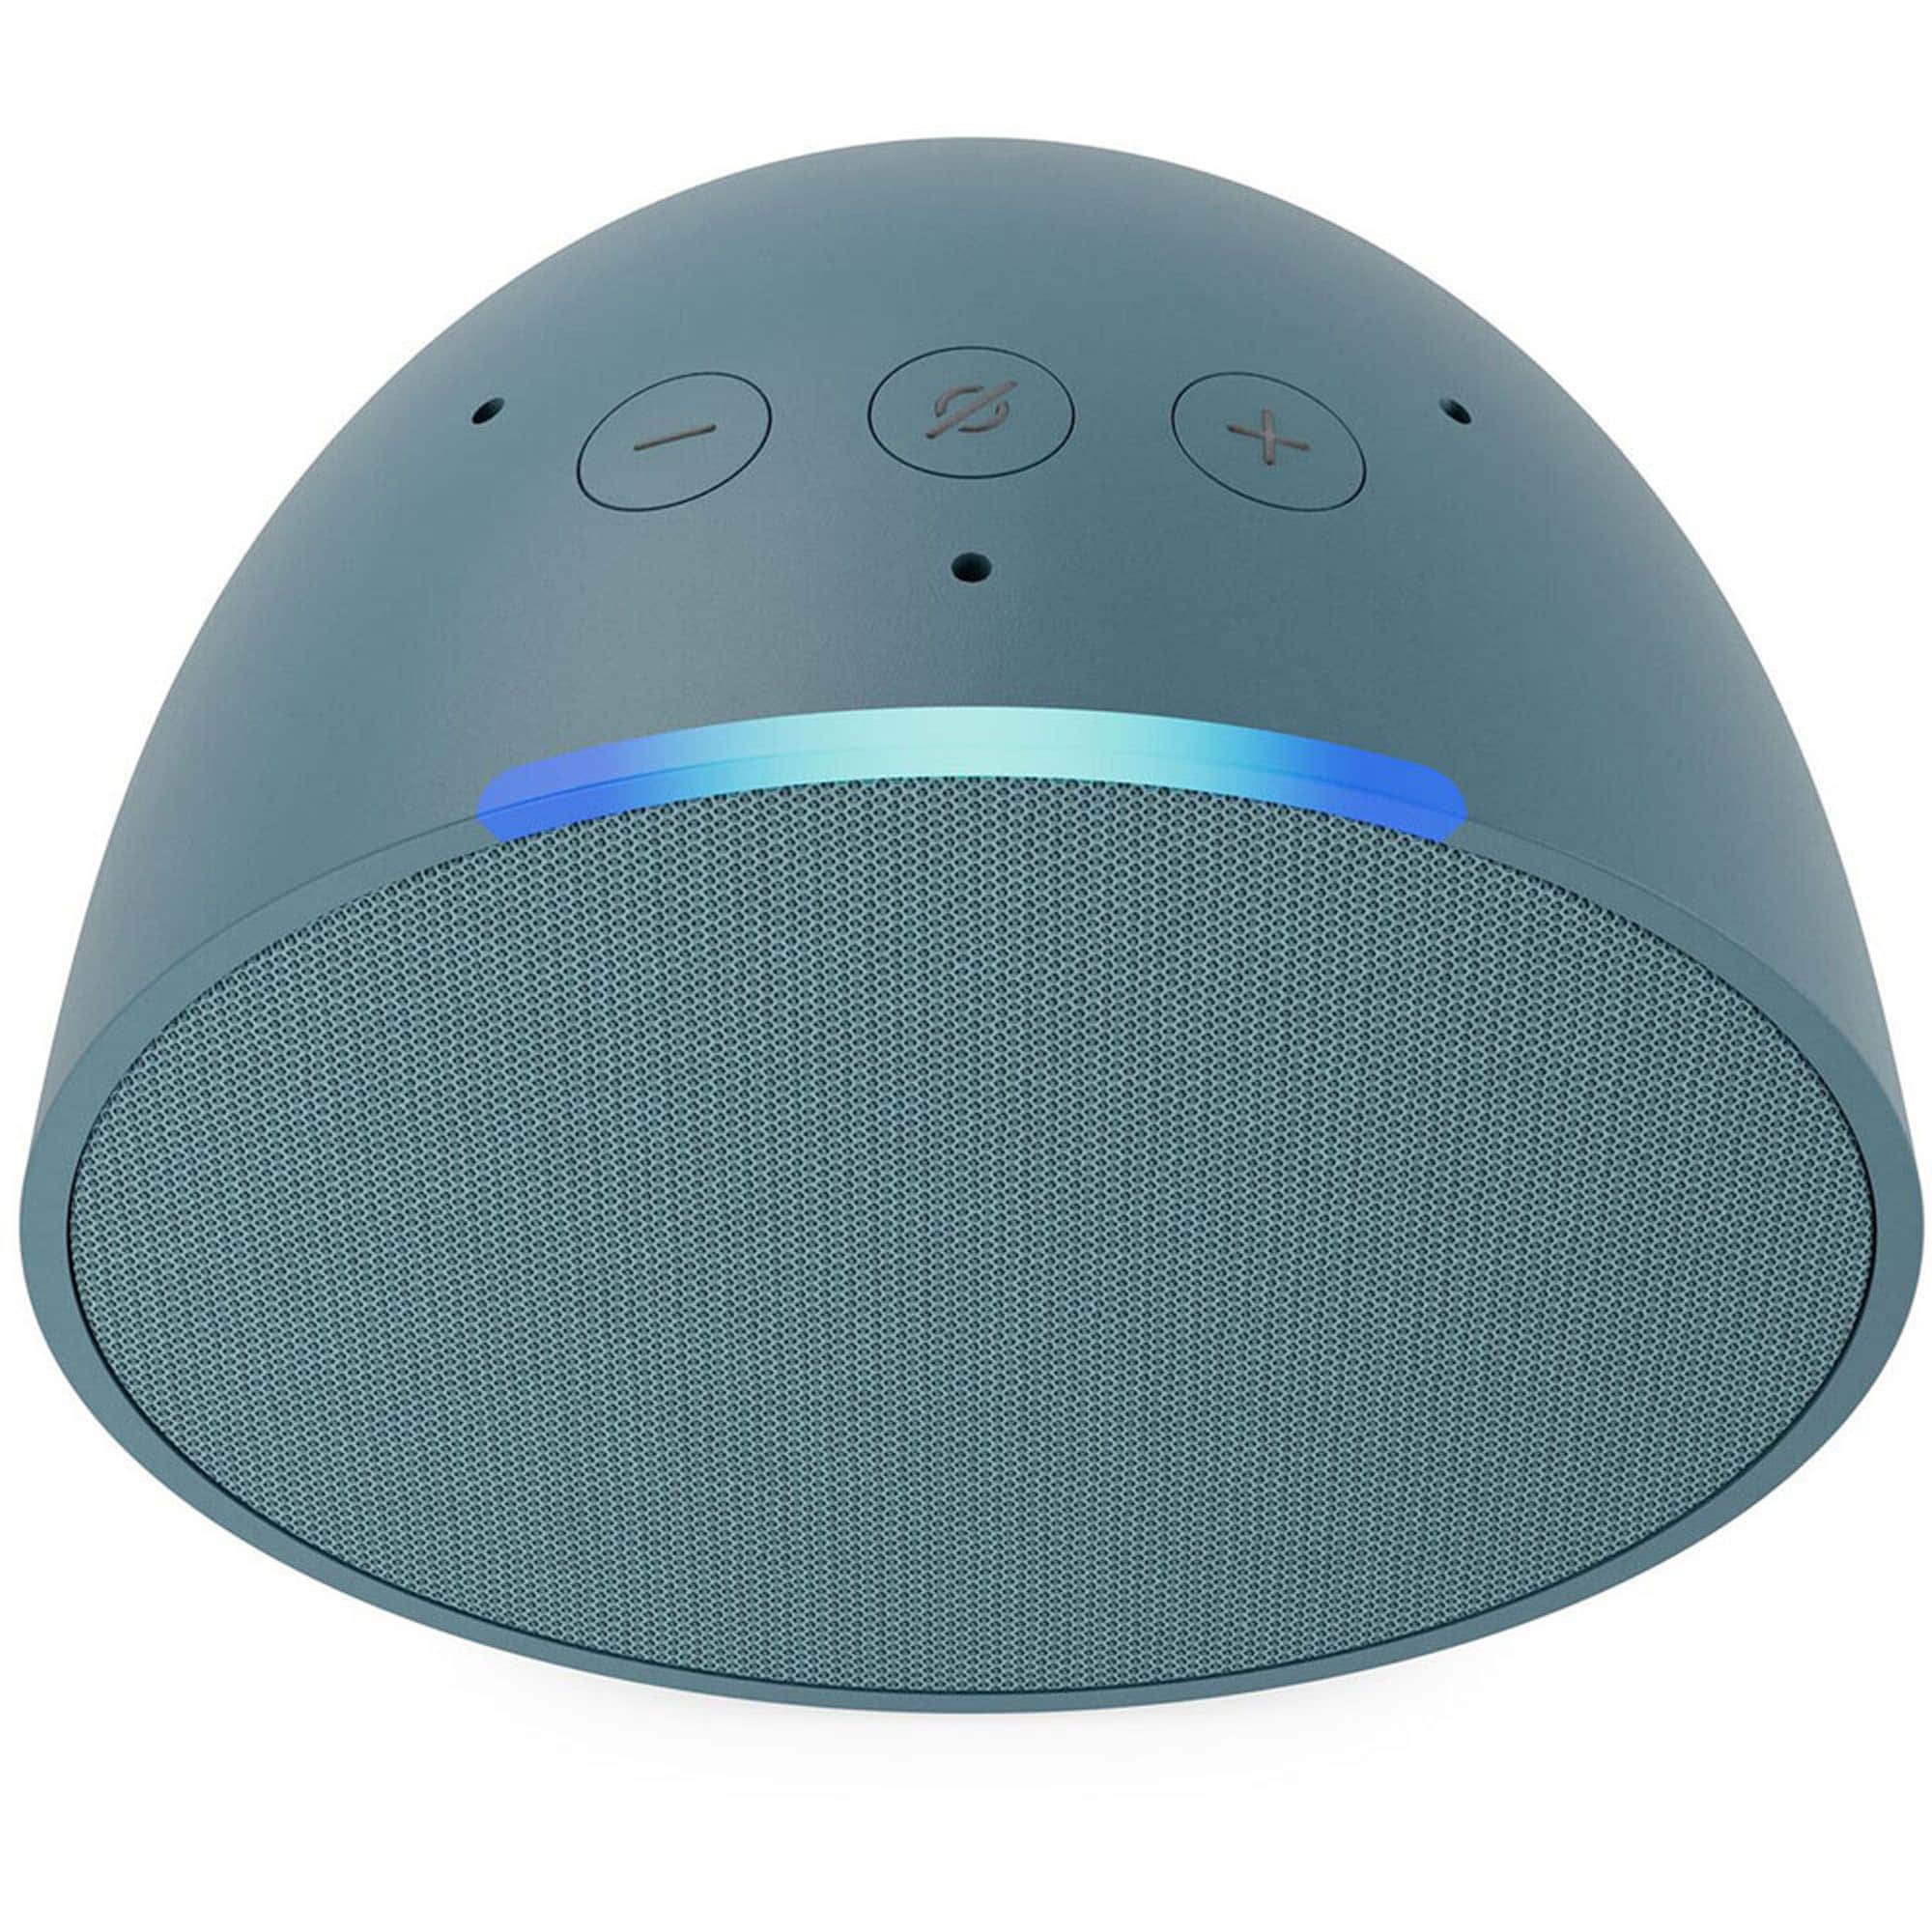 s Echo Pop smart speaker drops to $23